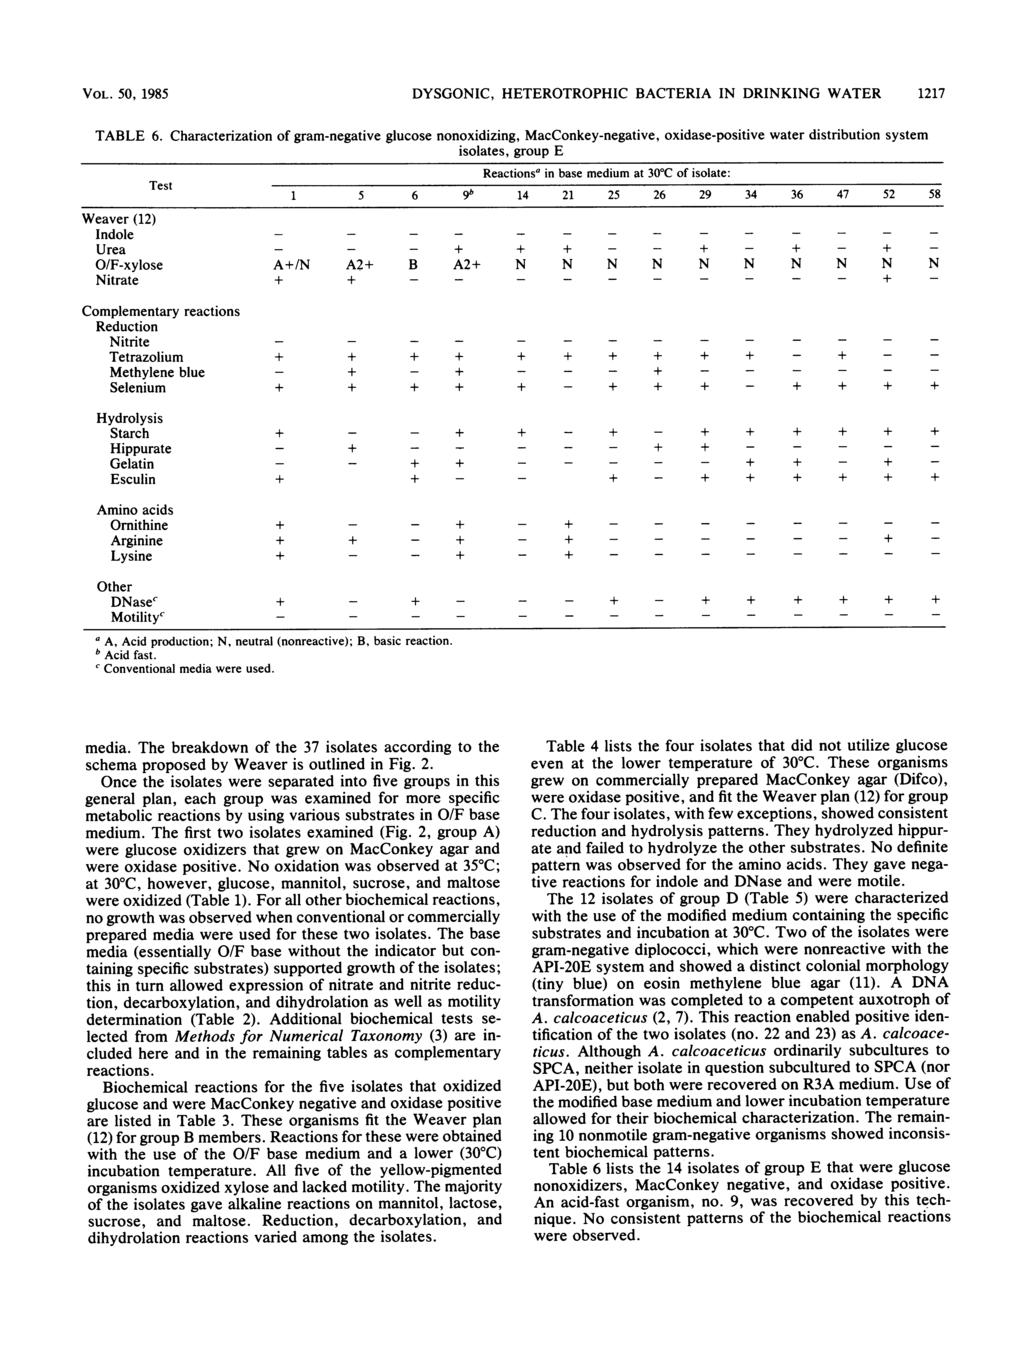 VOL. 50, 1985 DYSGONIC, HETEROTROPHIC BACTERIA IN DRINKING WATER 1217 TABLE 6.